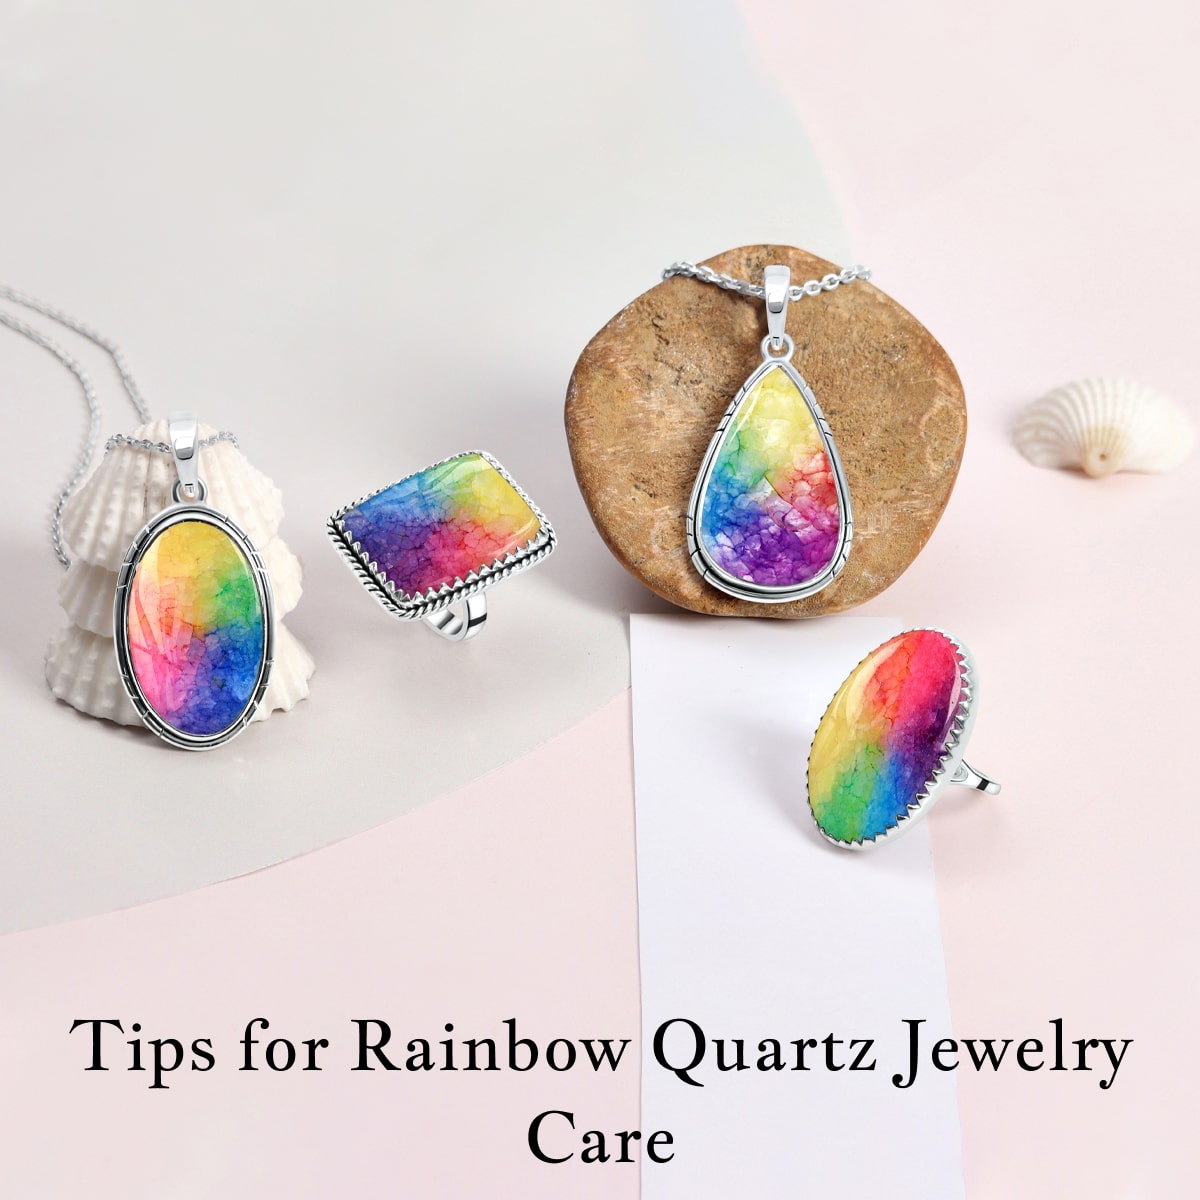 Care and Maintenance of Rainbow Quartz Jewelry